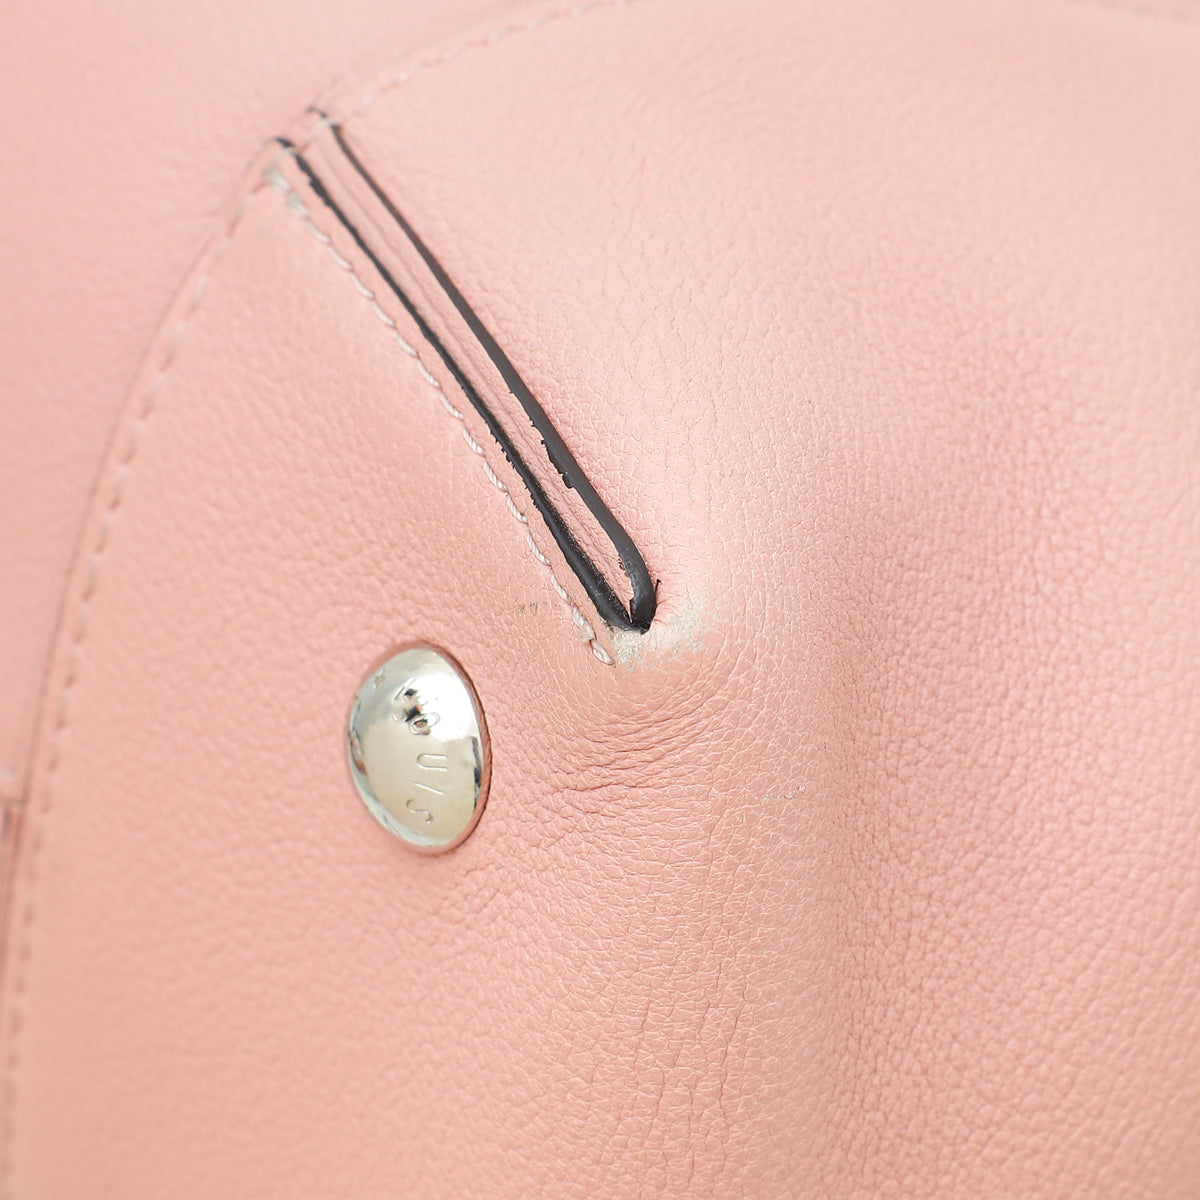 Louis Vuitton Python Trim Pink Leather Soft Lockit MM